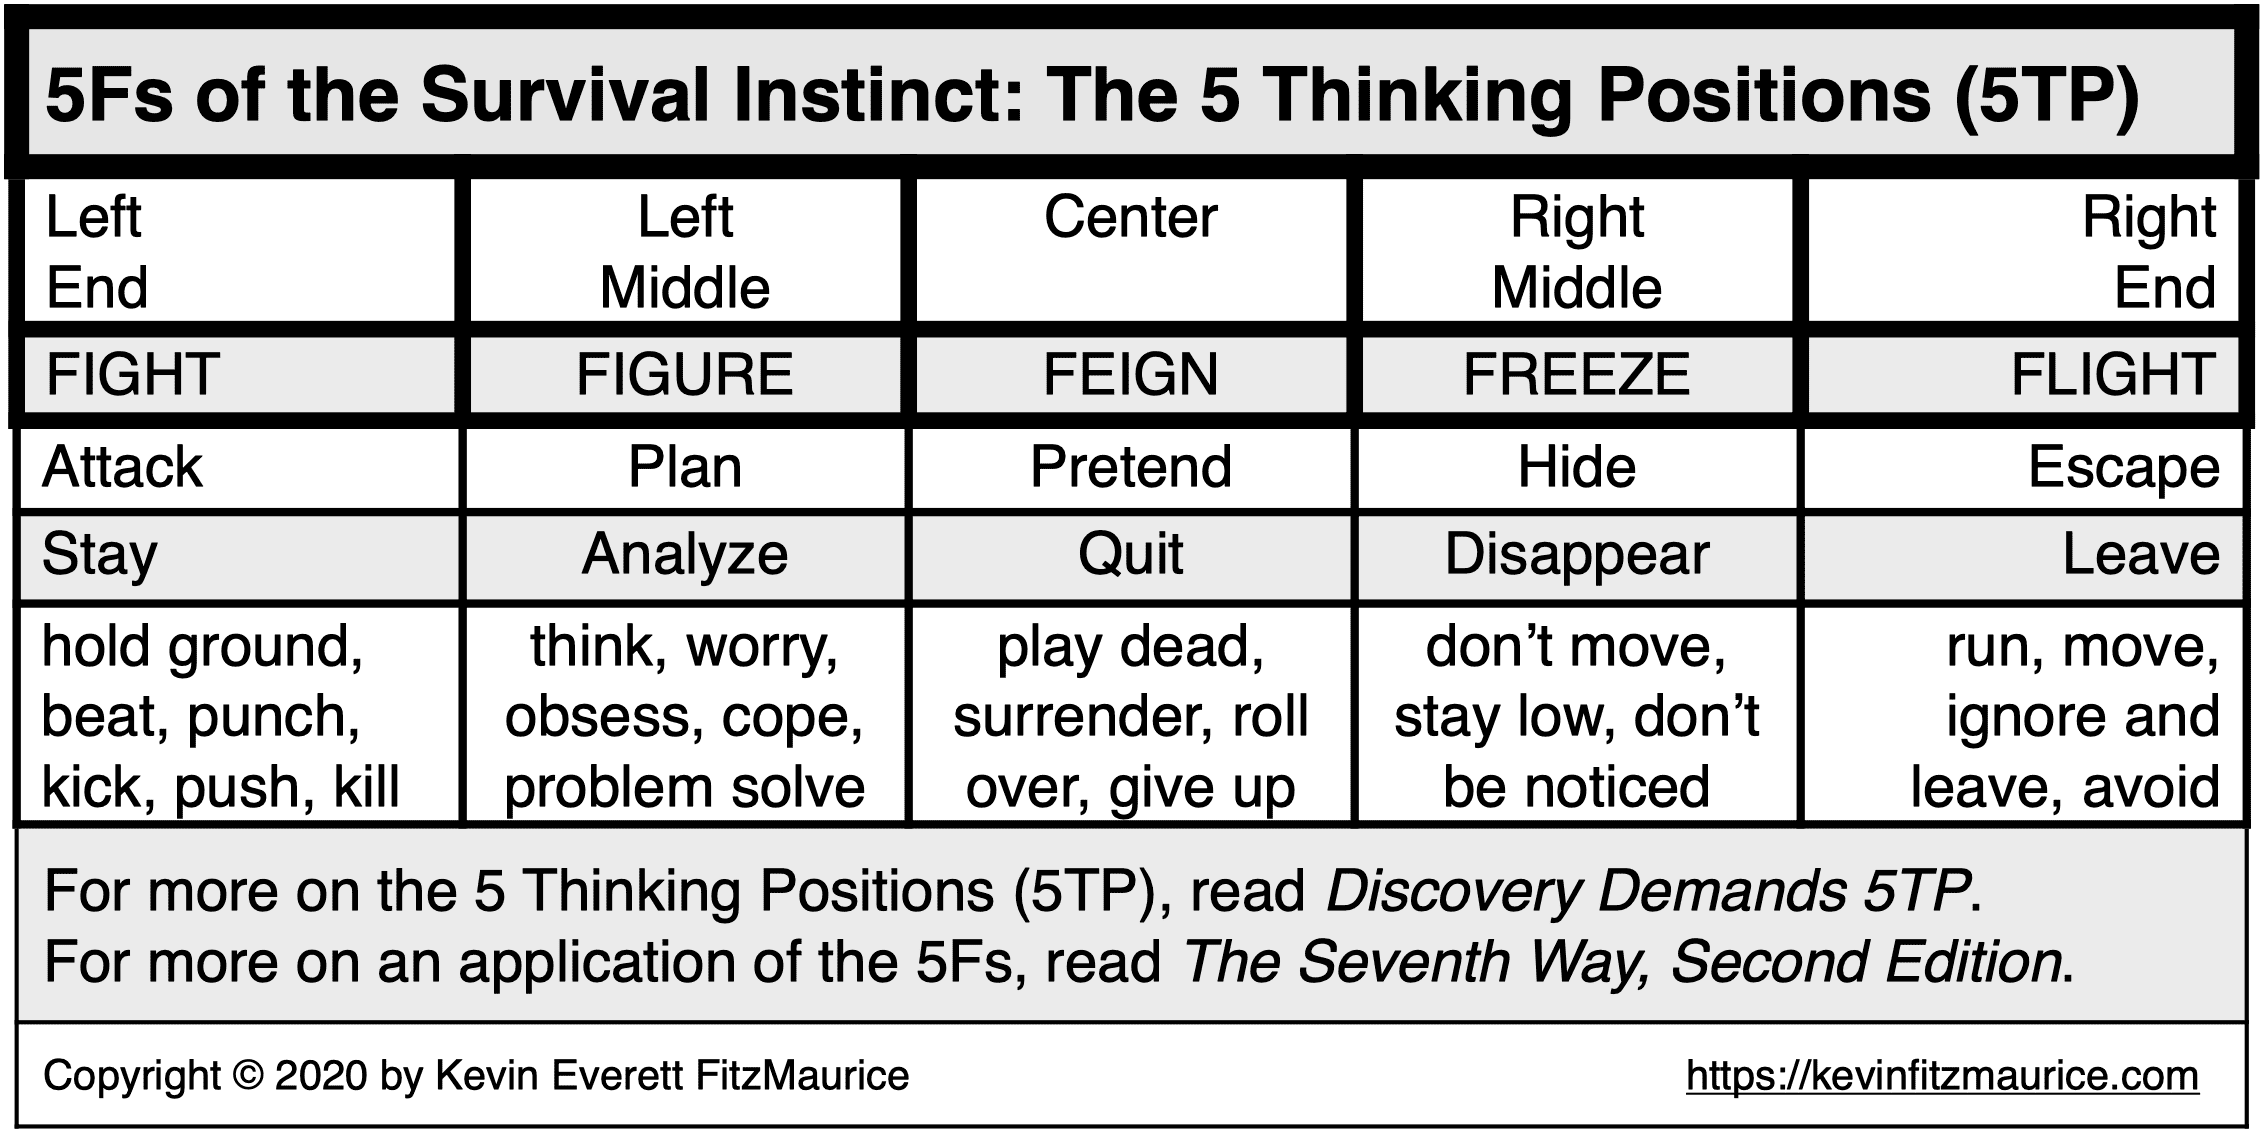 5Fs of the Survival Instinct